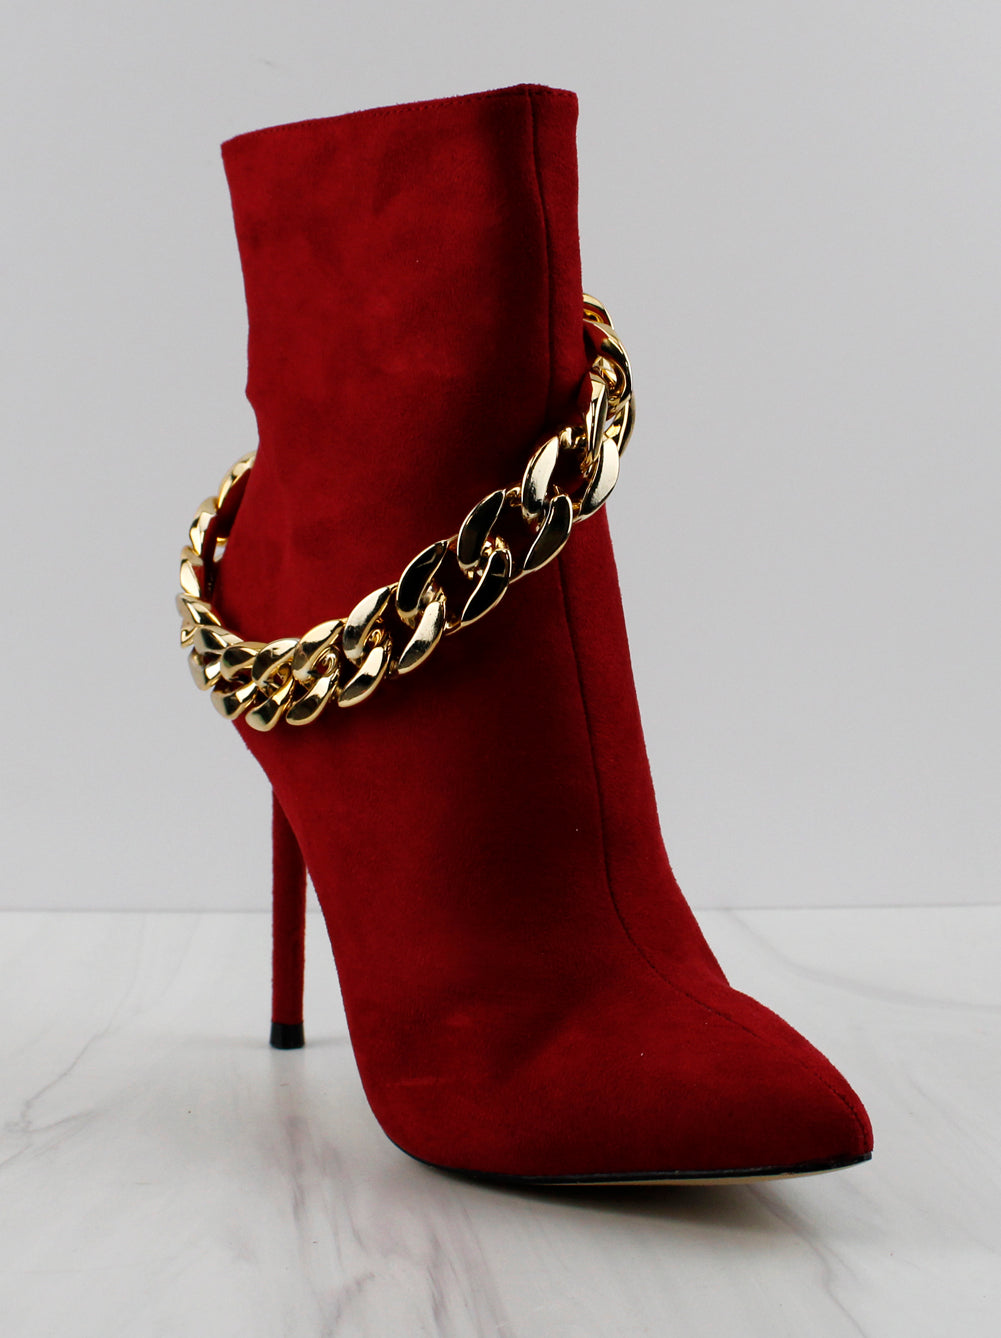 Dolce & Gabbana embellished heel boots - ShopStyle | Embellished heels,  Heels, Heeled boots